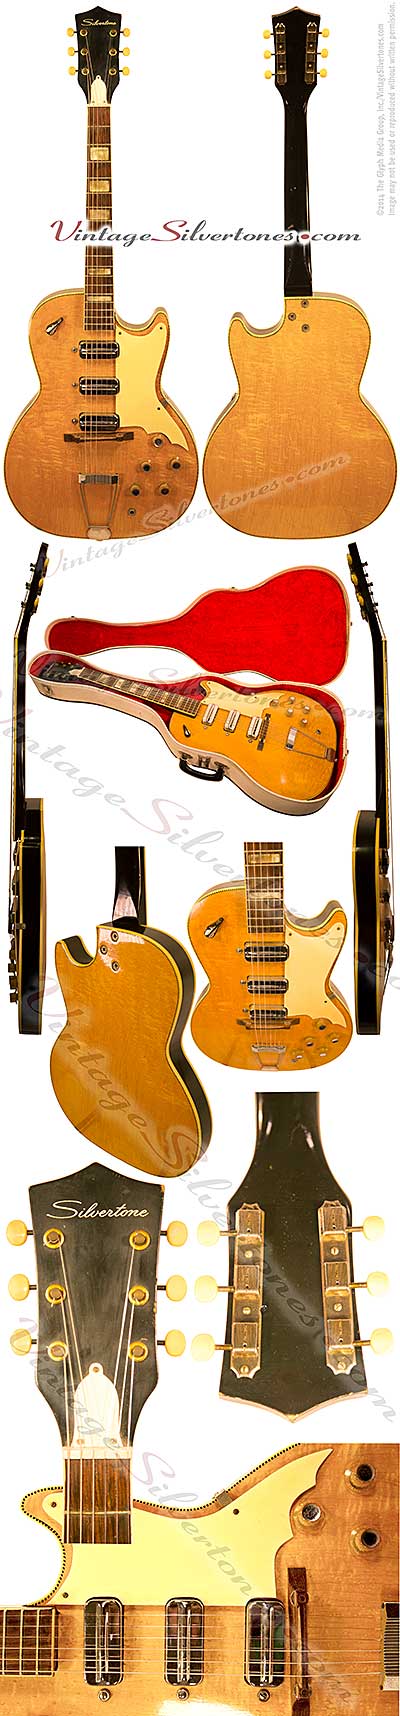 VintageSilvertone Speedster 1445 electric guitar 3 pu blond black